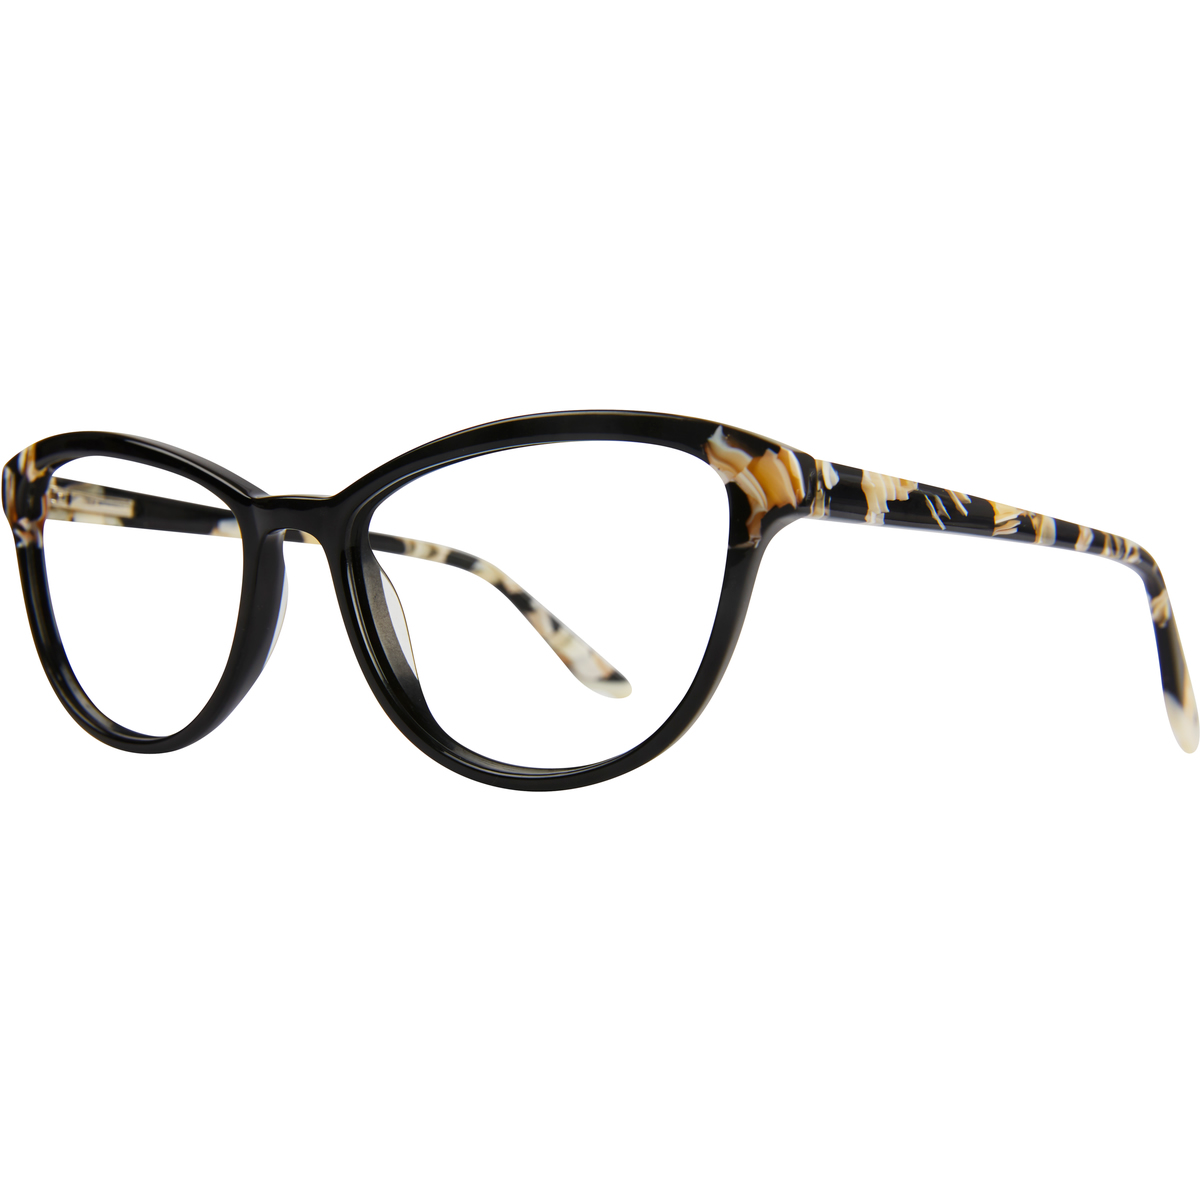 Freya Trixie Glasses | Buy Glasses, Glasses Frames & Sunglasses Online ...